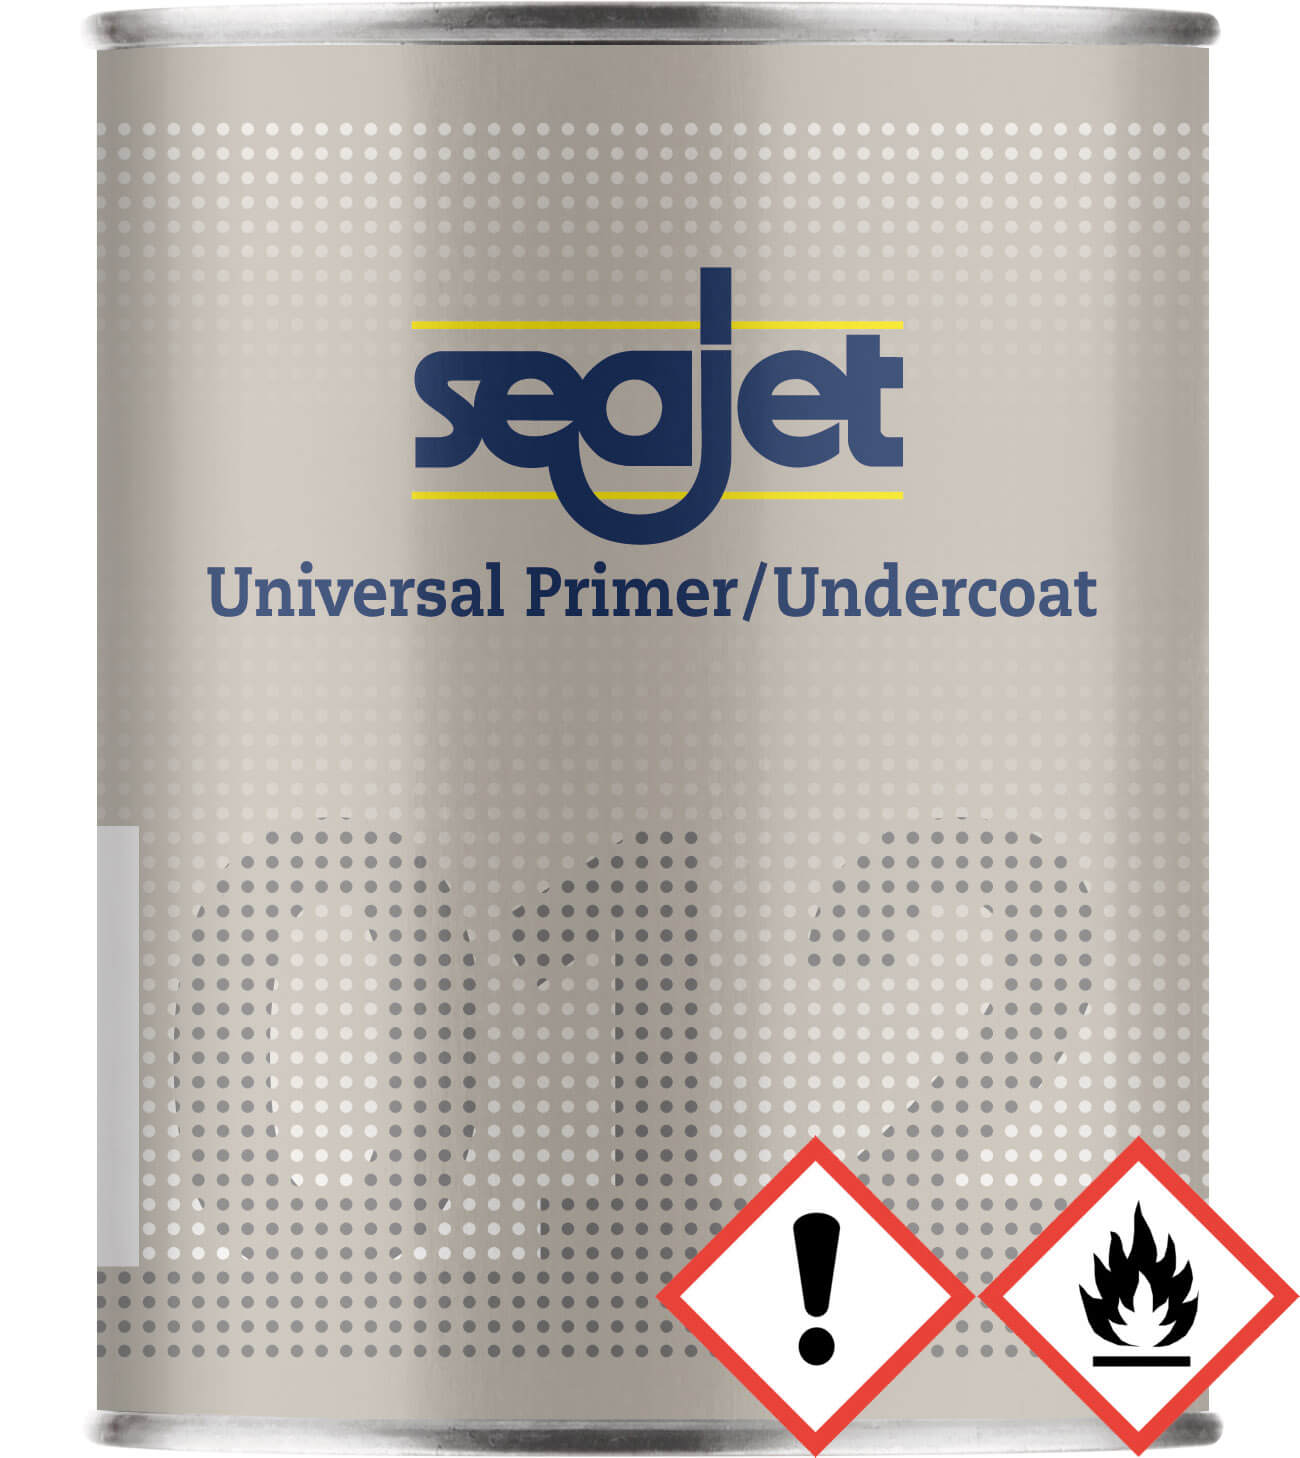 Universal Primer 012 Undercoat